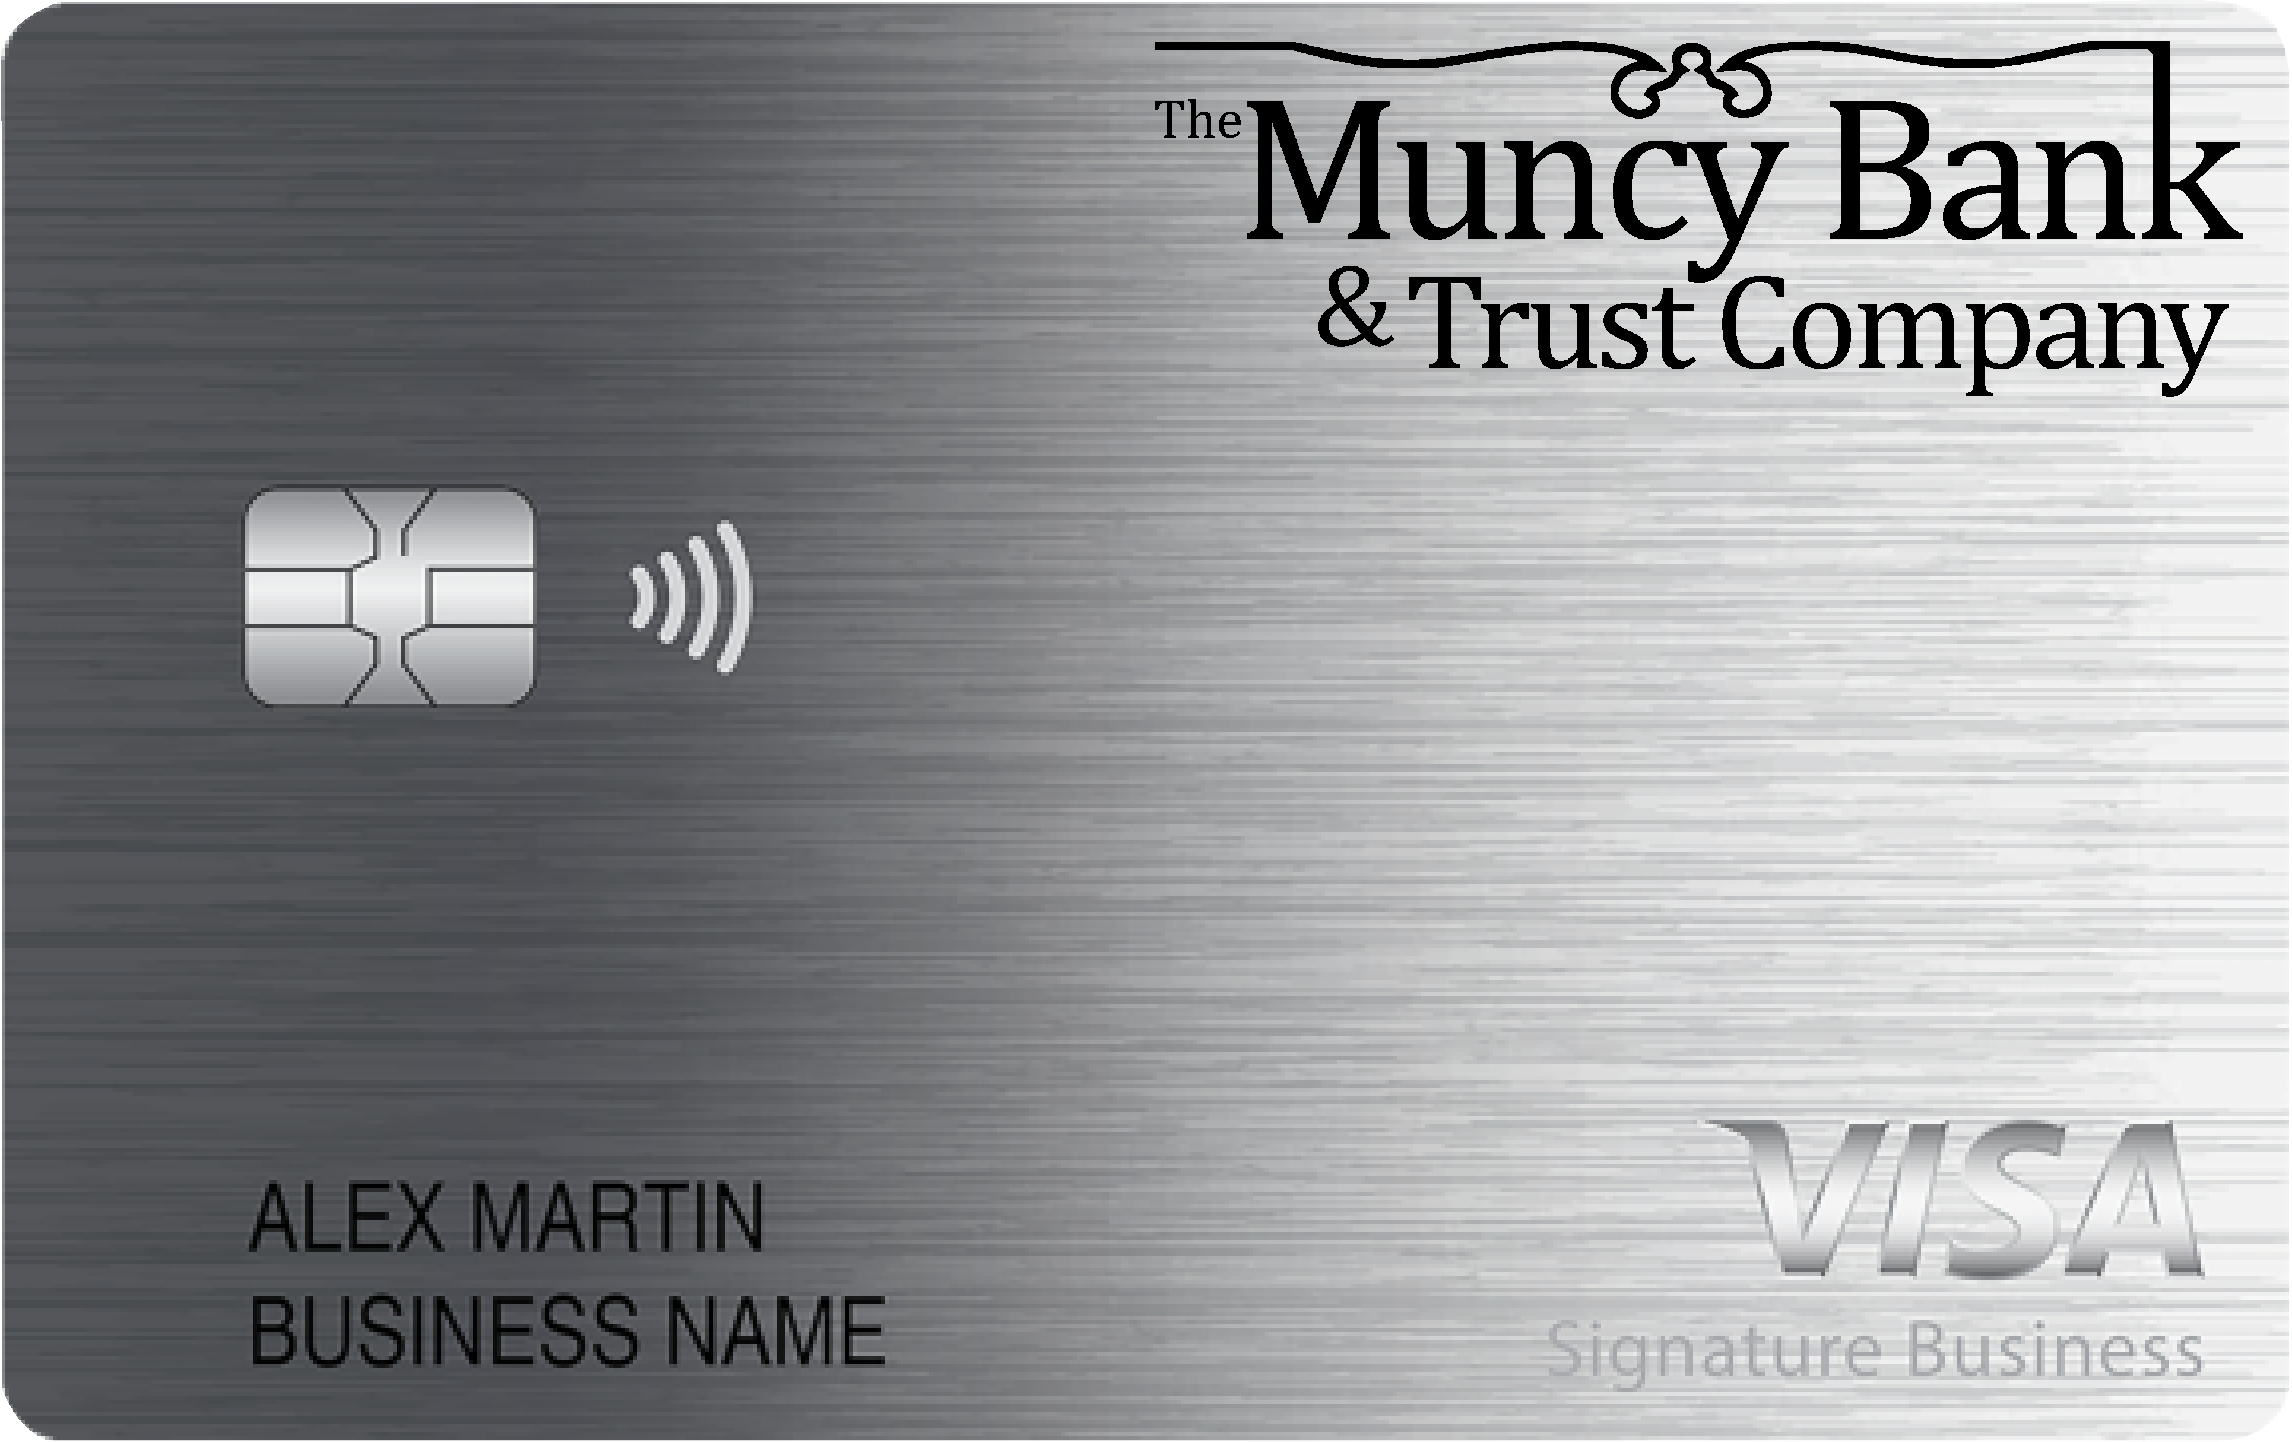 The Muncy Bank & Trust Company